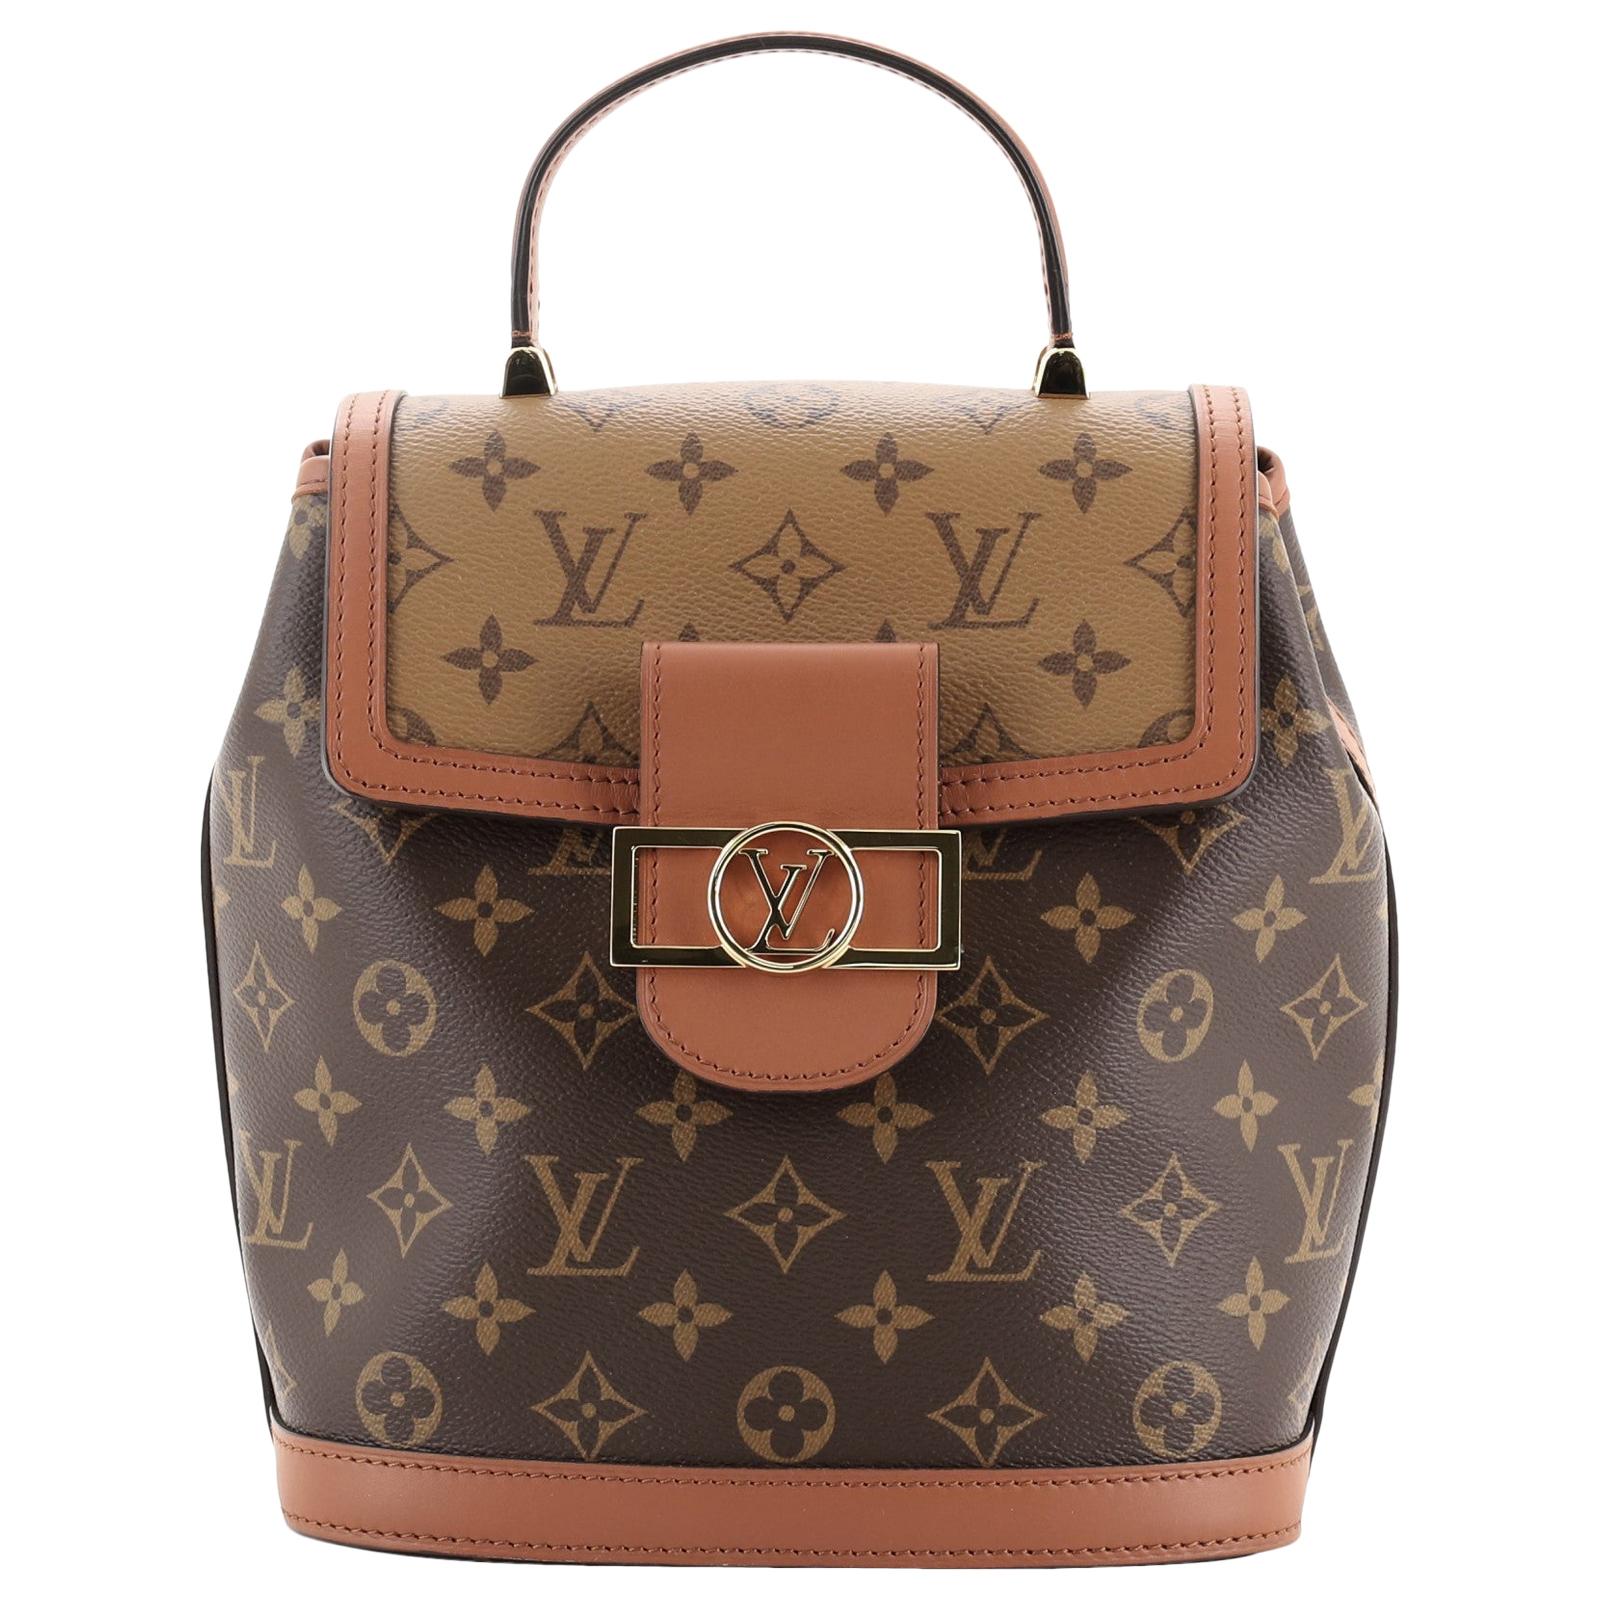 Dauphine Bag Louis Vuitton - Italian outfit fashion